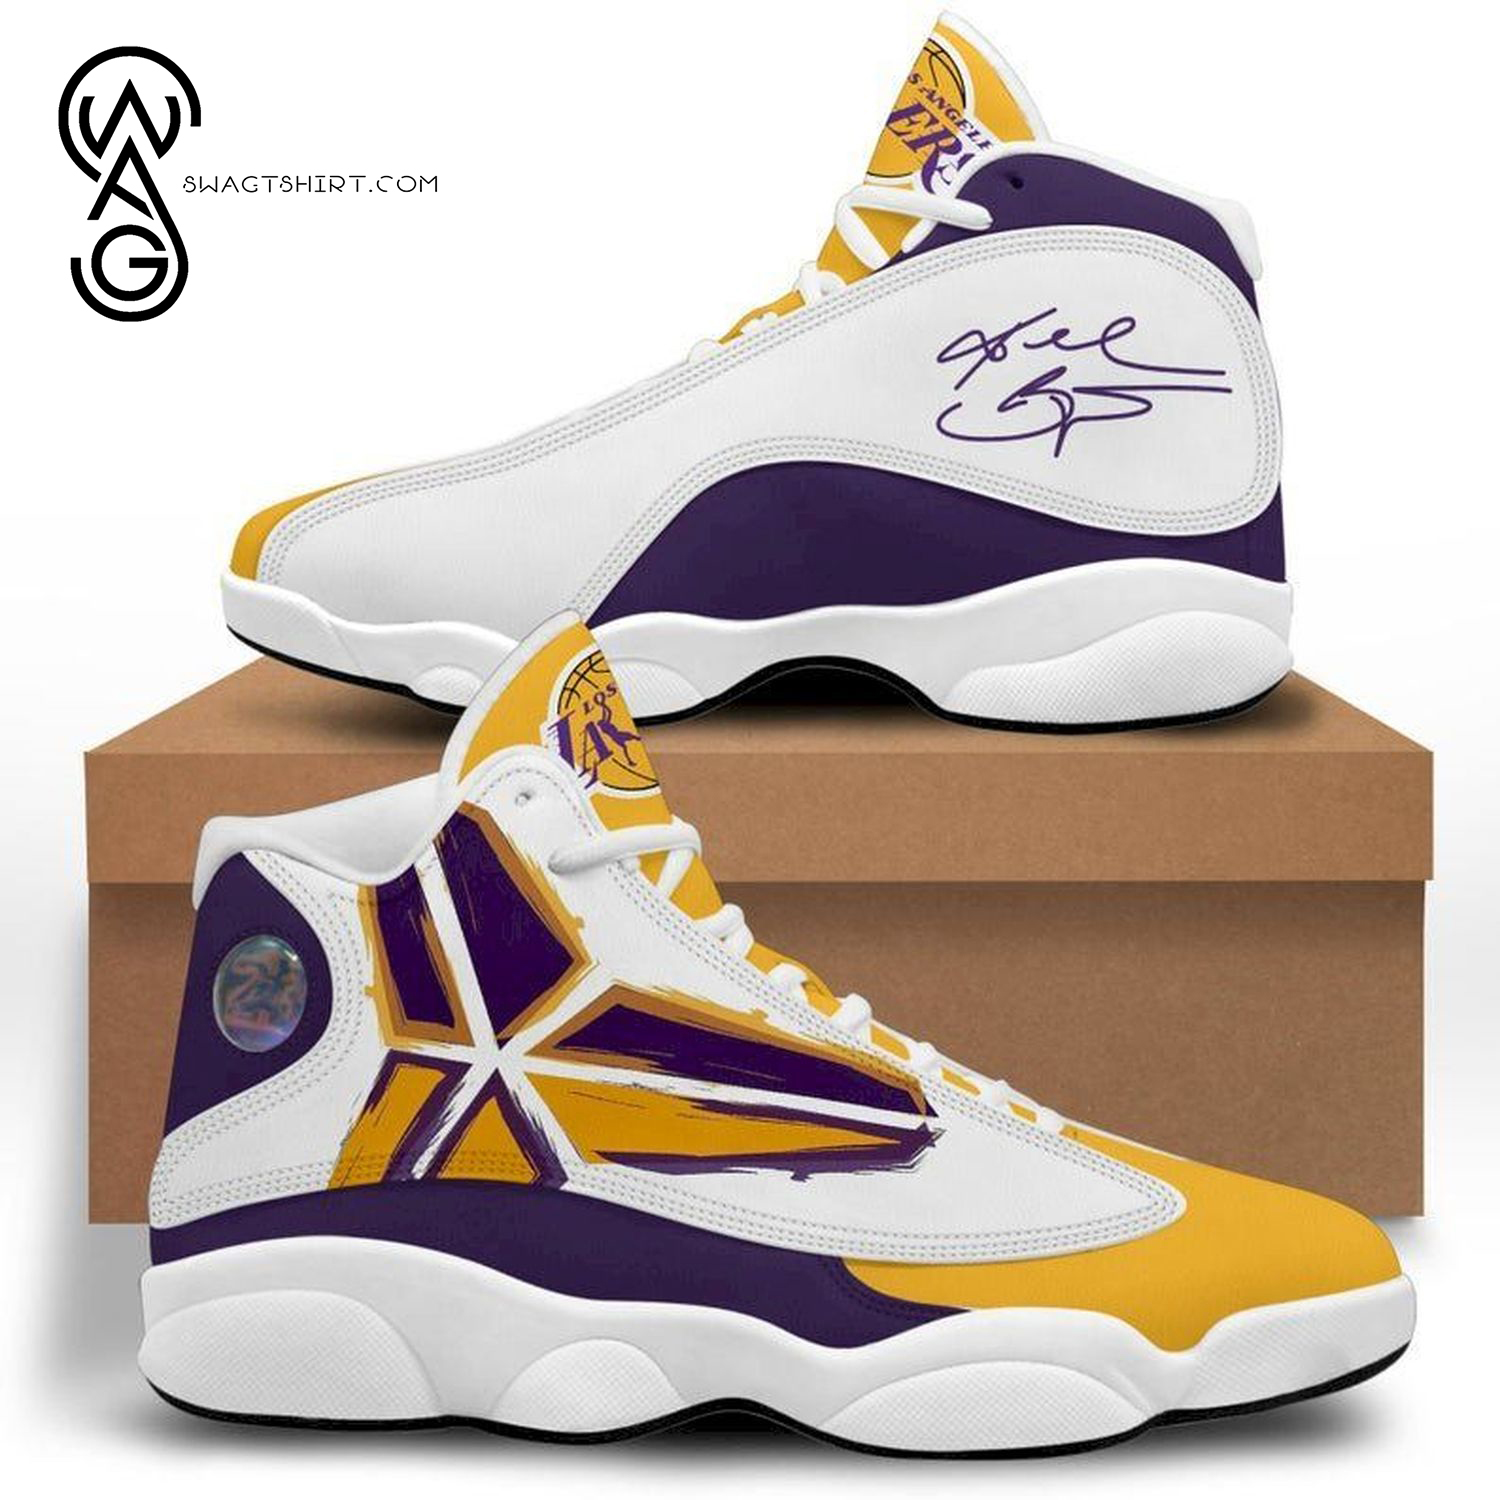 NBA Kobe Bryant Air Jordan 13 Shoes